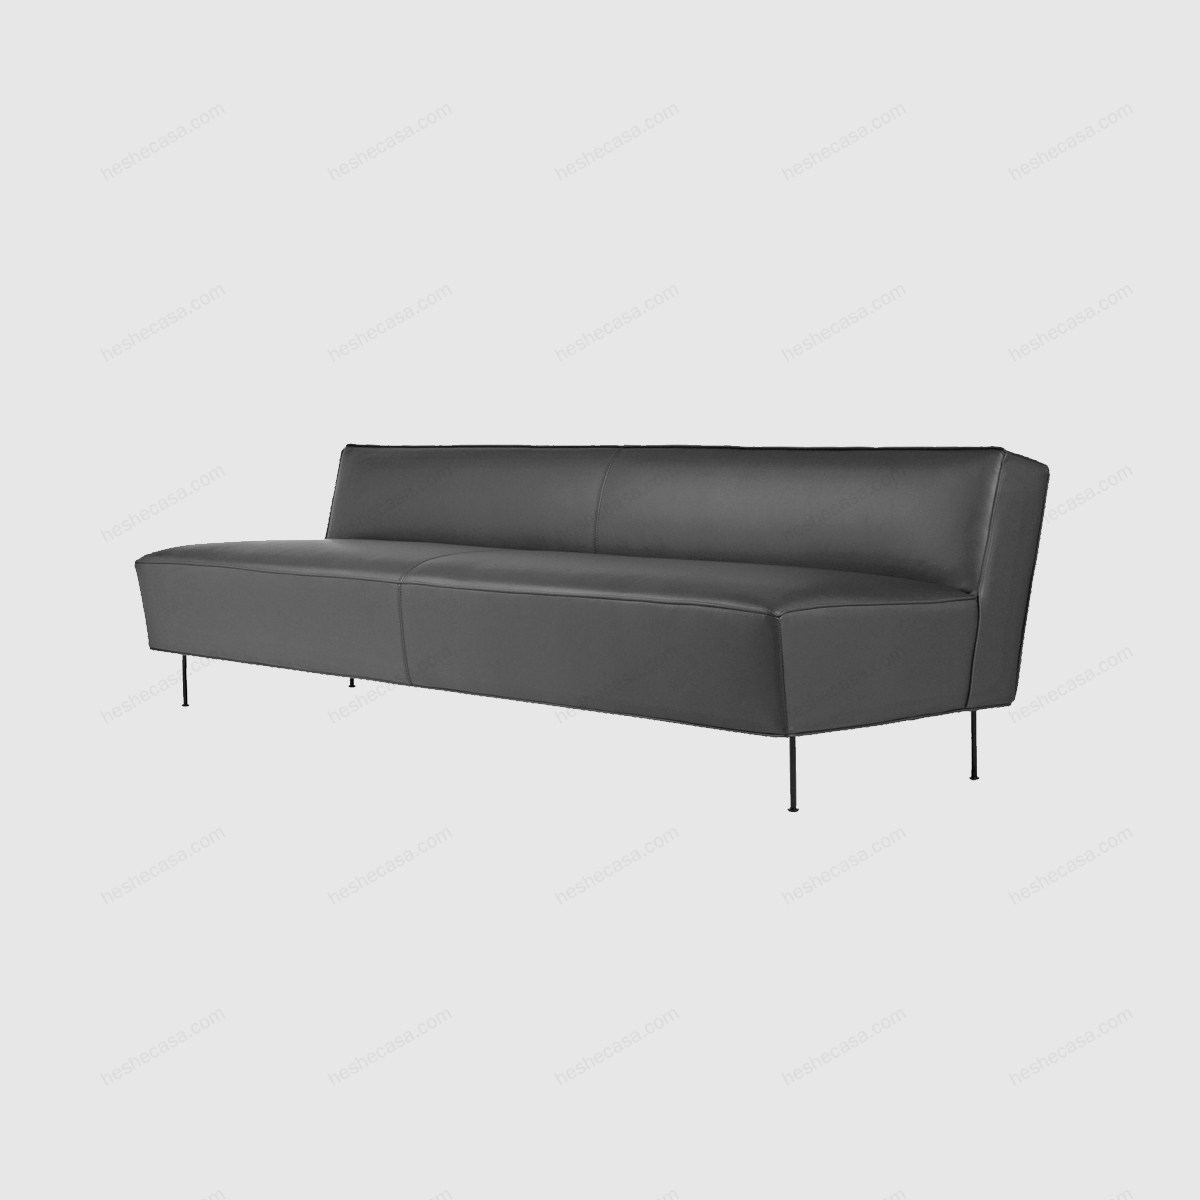 Modern Line Sofa 1沙发